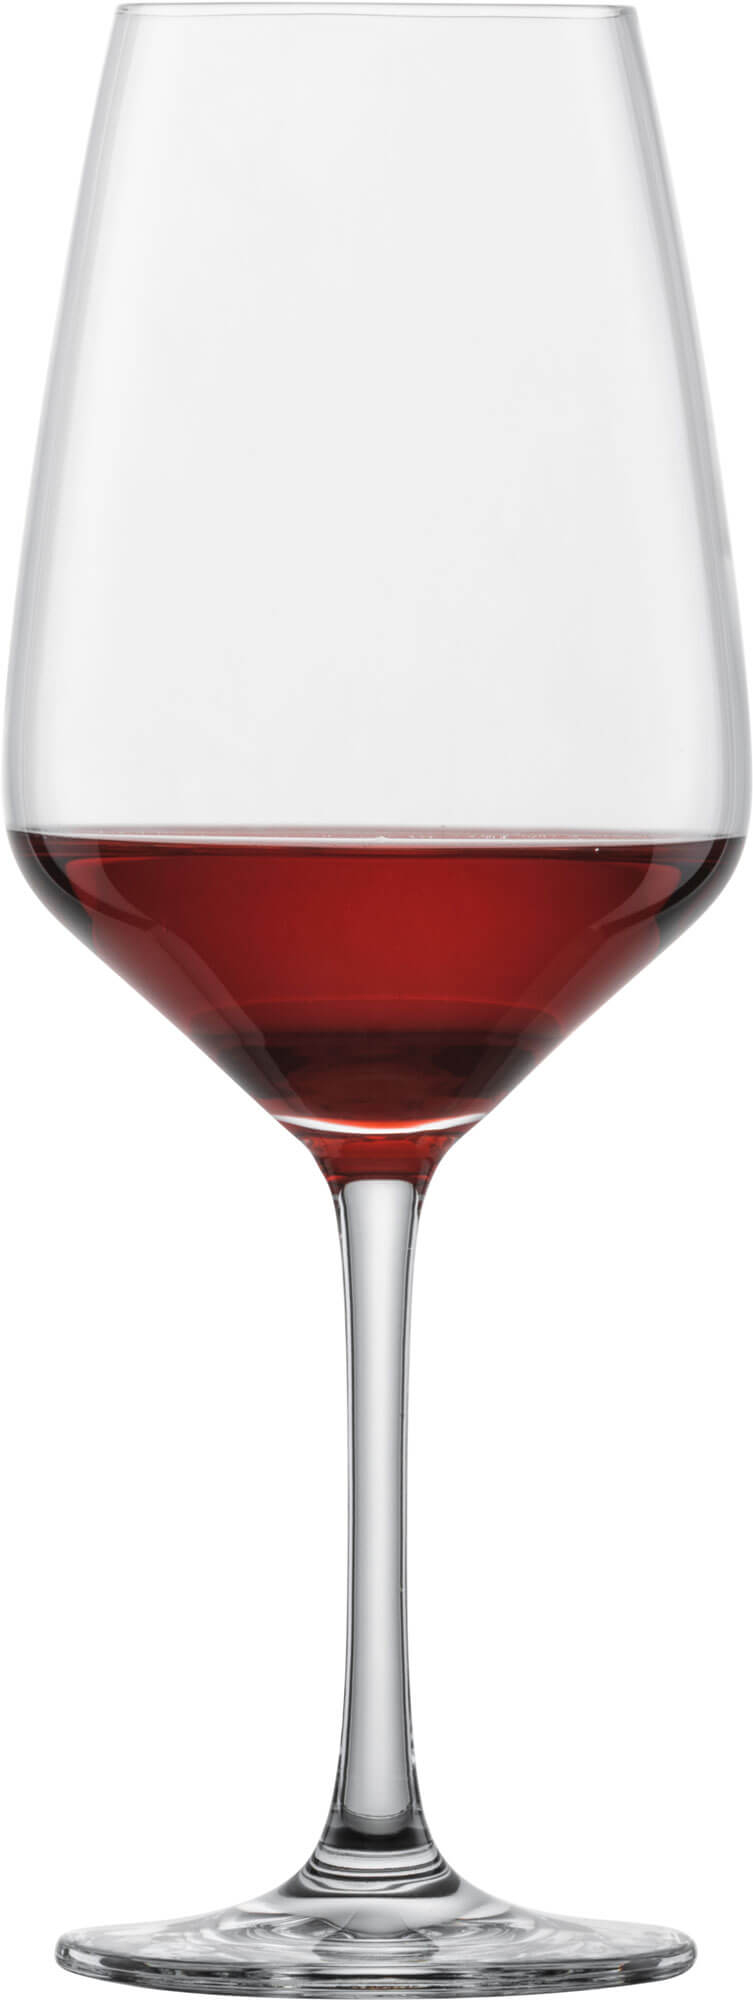 Rotweinglas Taste, Schott Zwiesel - 497ml, 0,2l Eiche (6 Stk.)